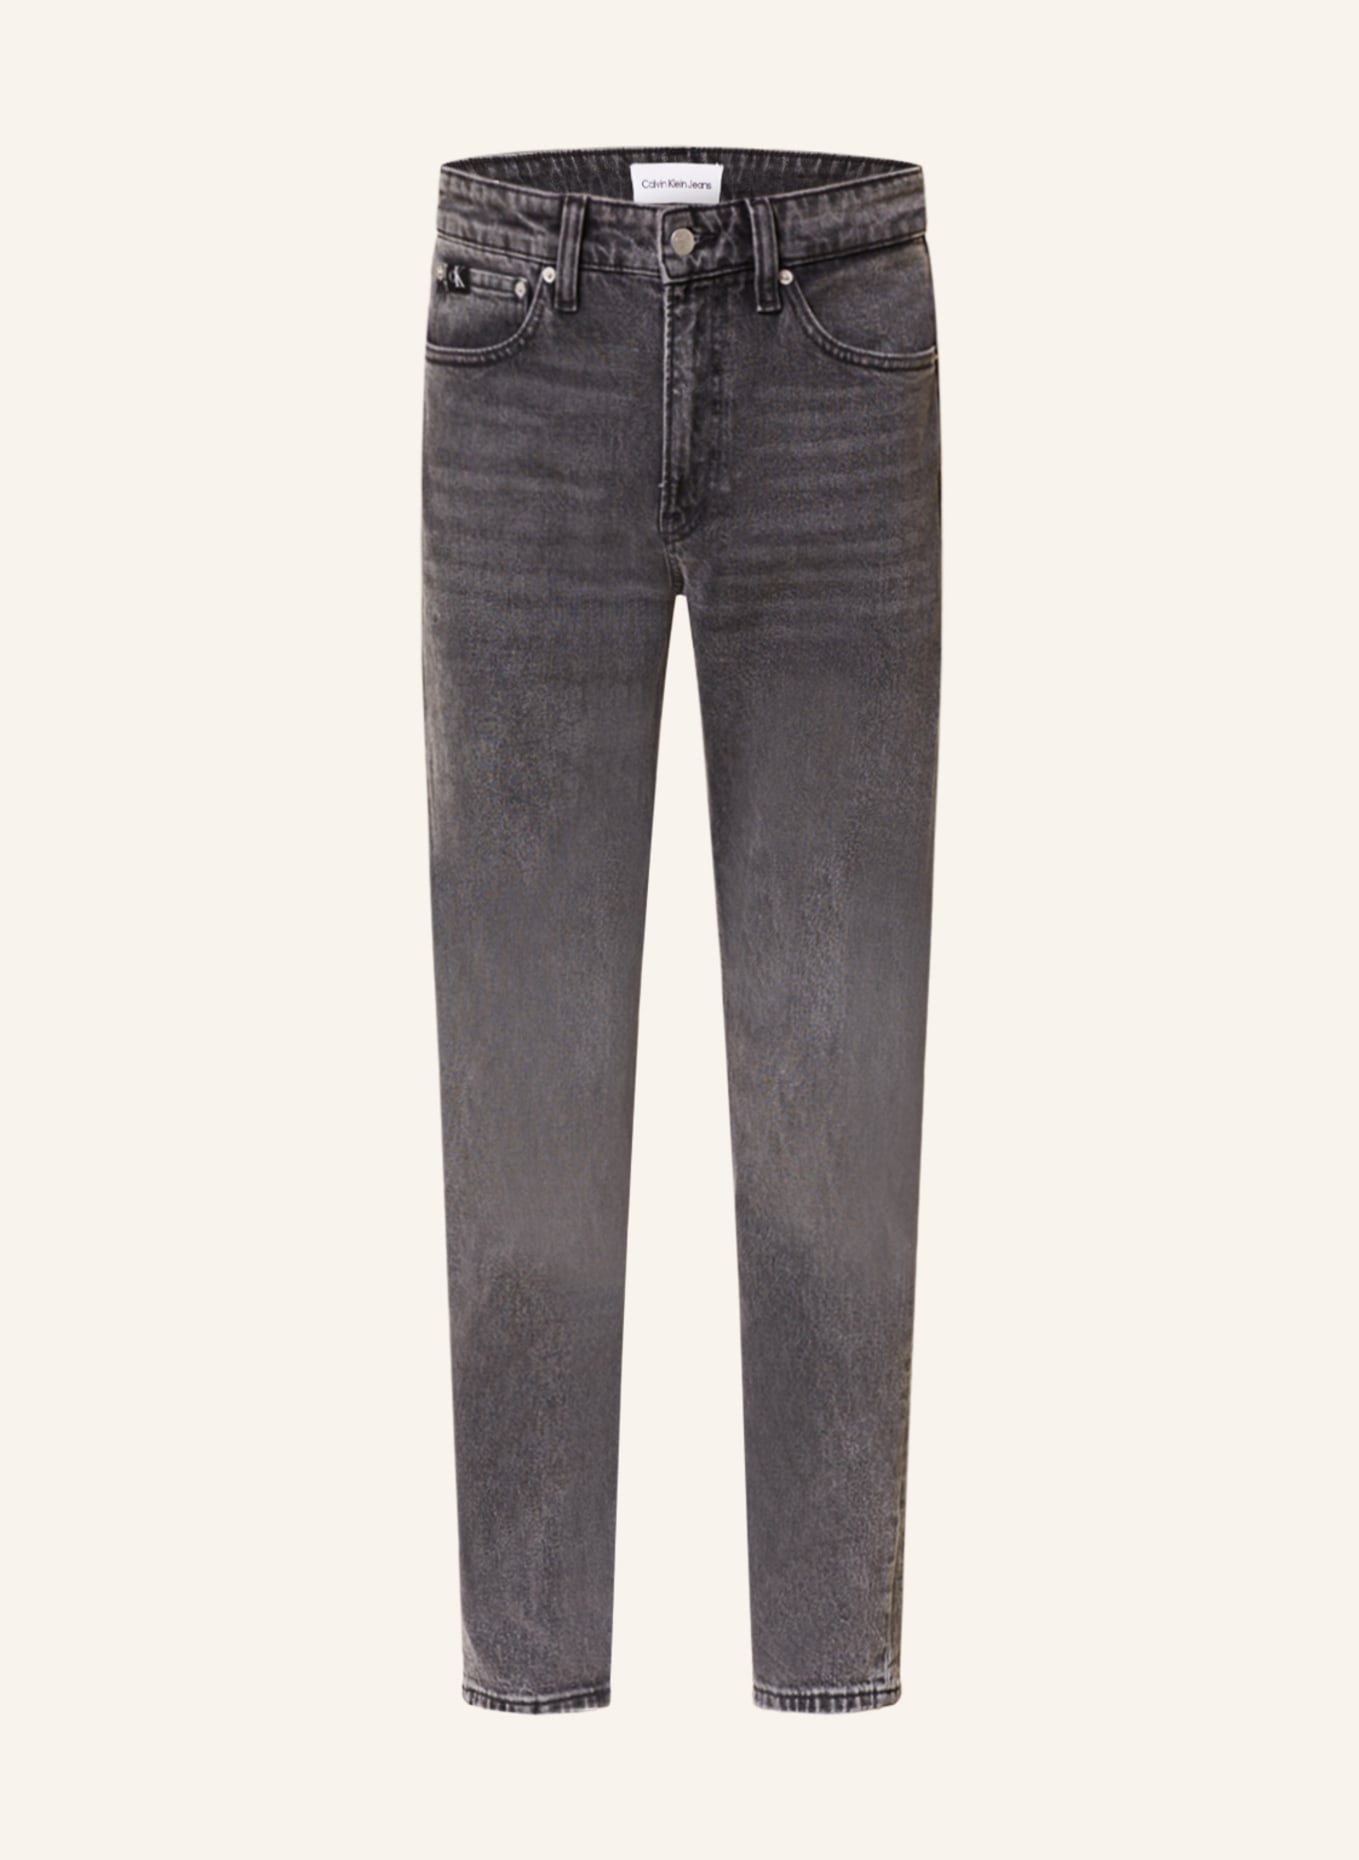 Calvin Klein Jeans Jeans Slim Taper grau in Fit